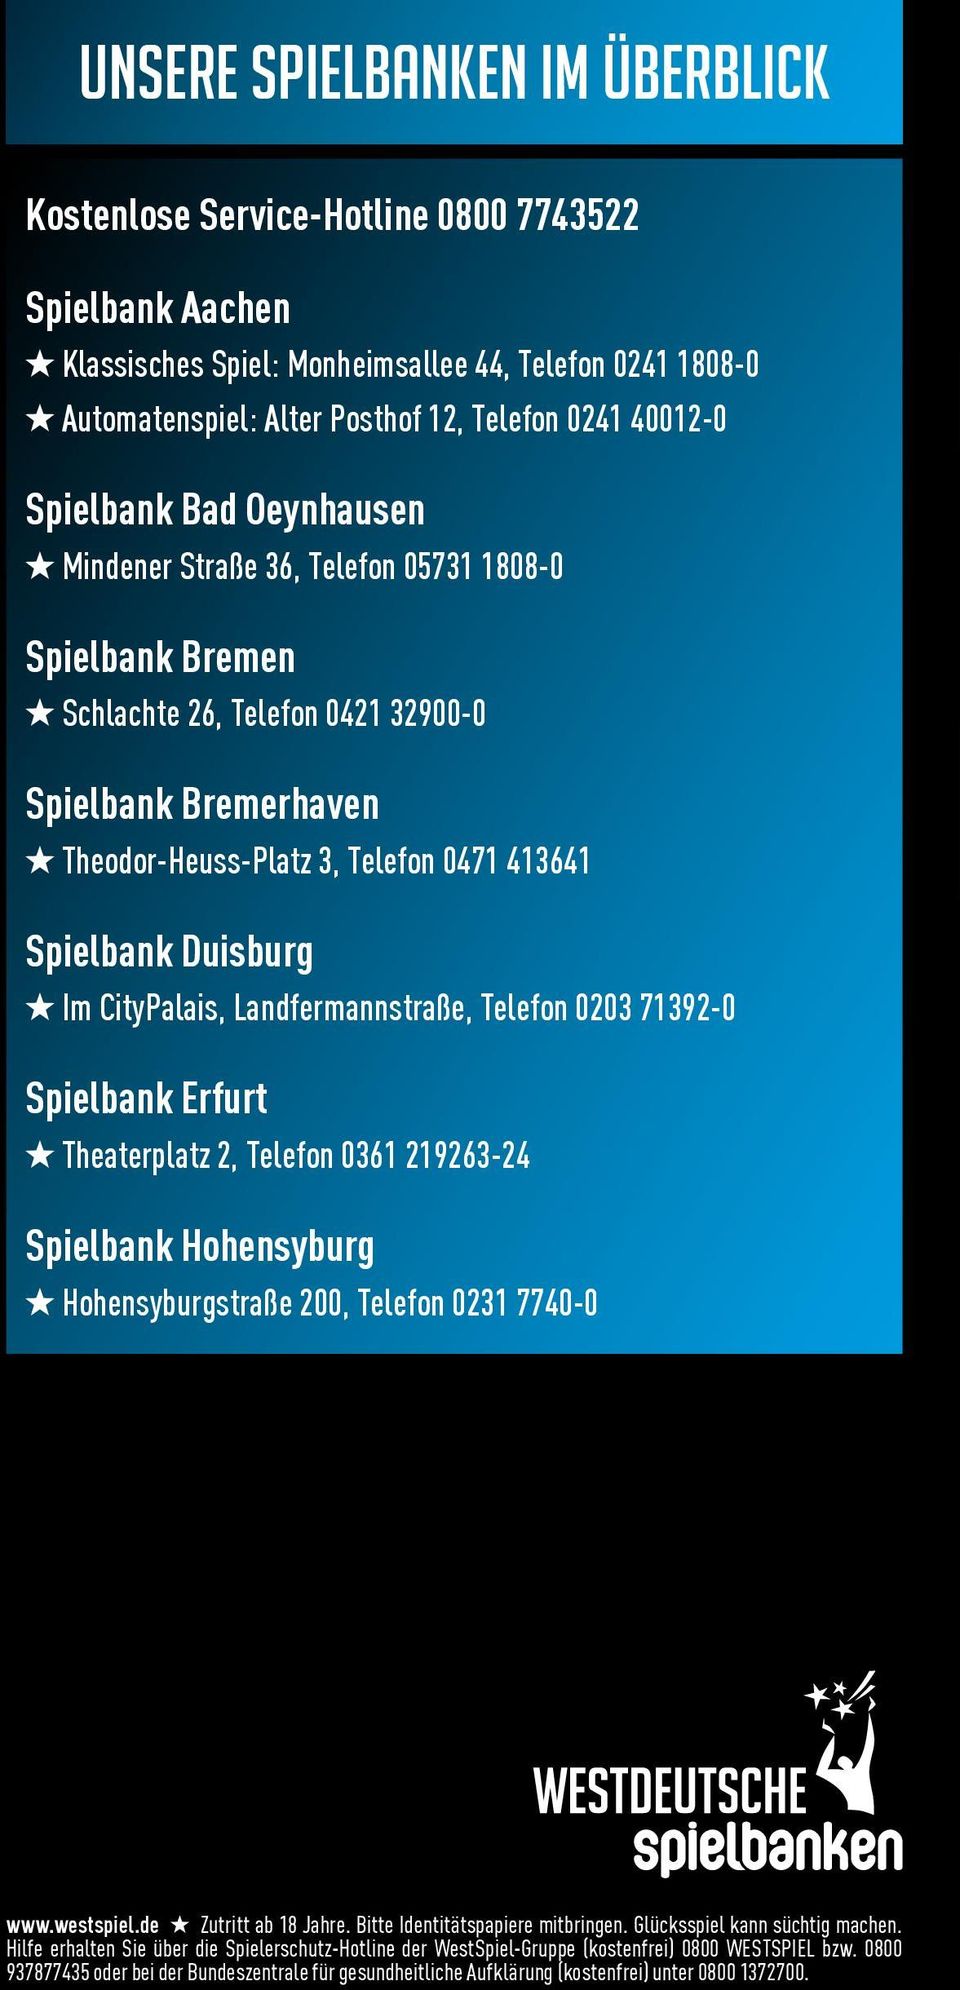 Spielbank Duisburg Im CityPalais, Landfermannstraße, Telefon 0203 71392-0 Spielbank Erfurt Theaterplatz 2, Telefon 0361 219263-24 Spielbank Hohensyburg Hohensyburgstraße 200, Telefon 0231 7740-0 www.